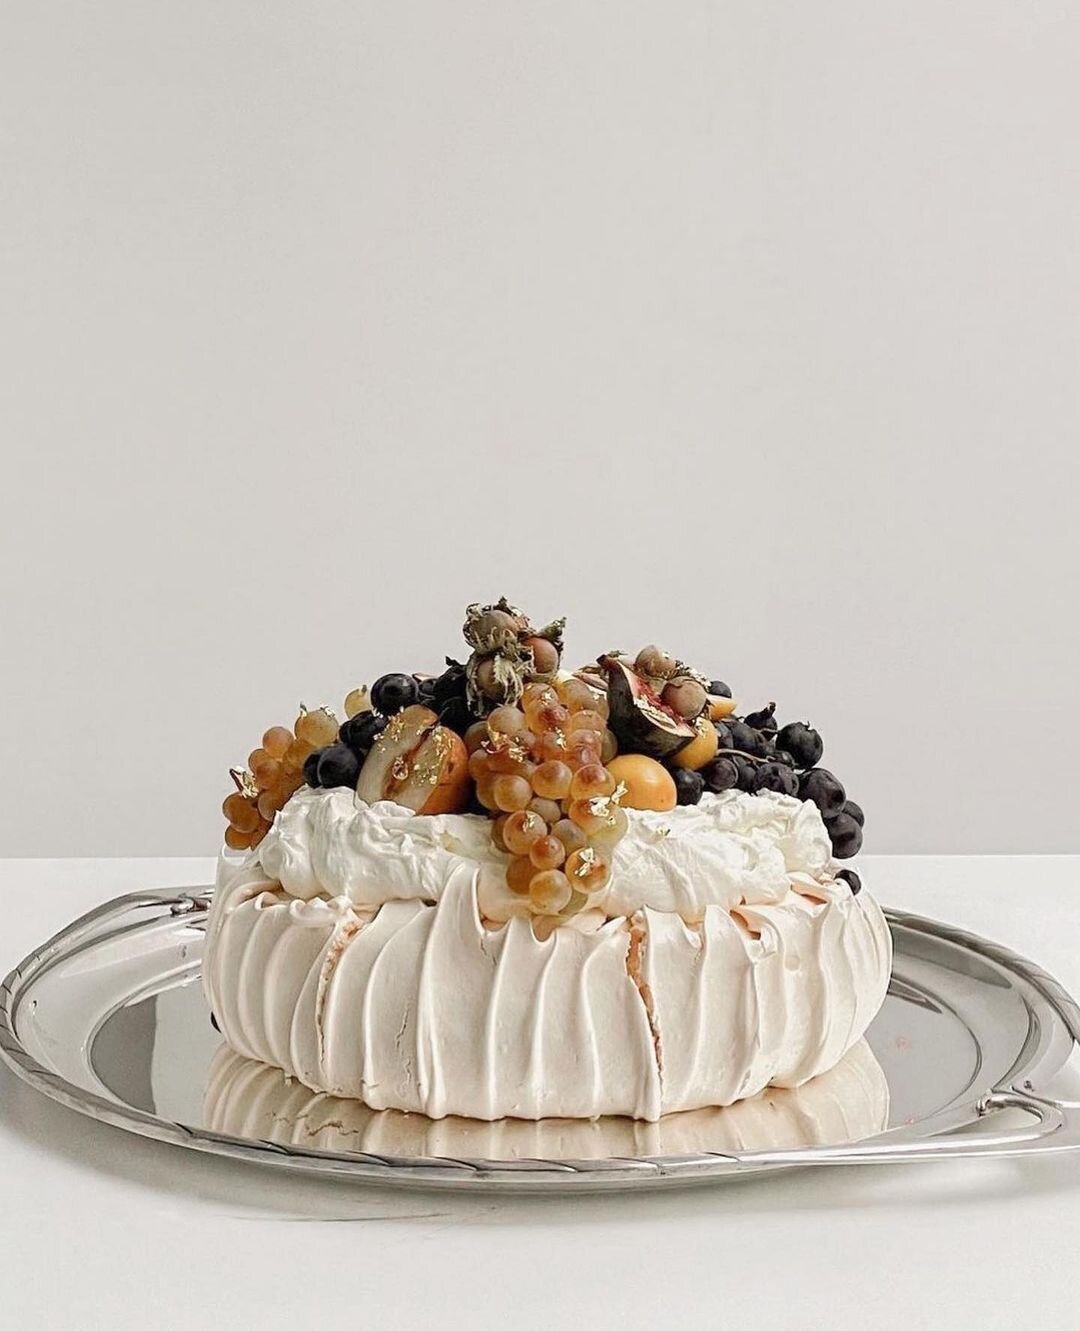 Pavlova or cake?
Via @bymalenebirger
#TheFallBride